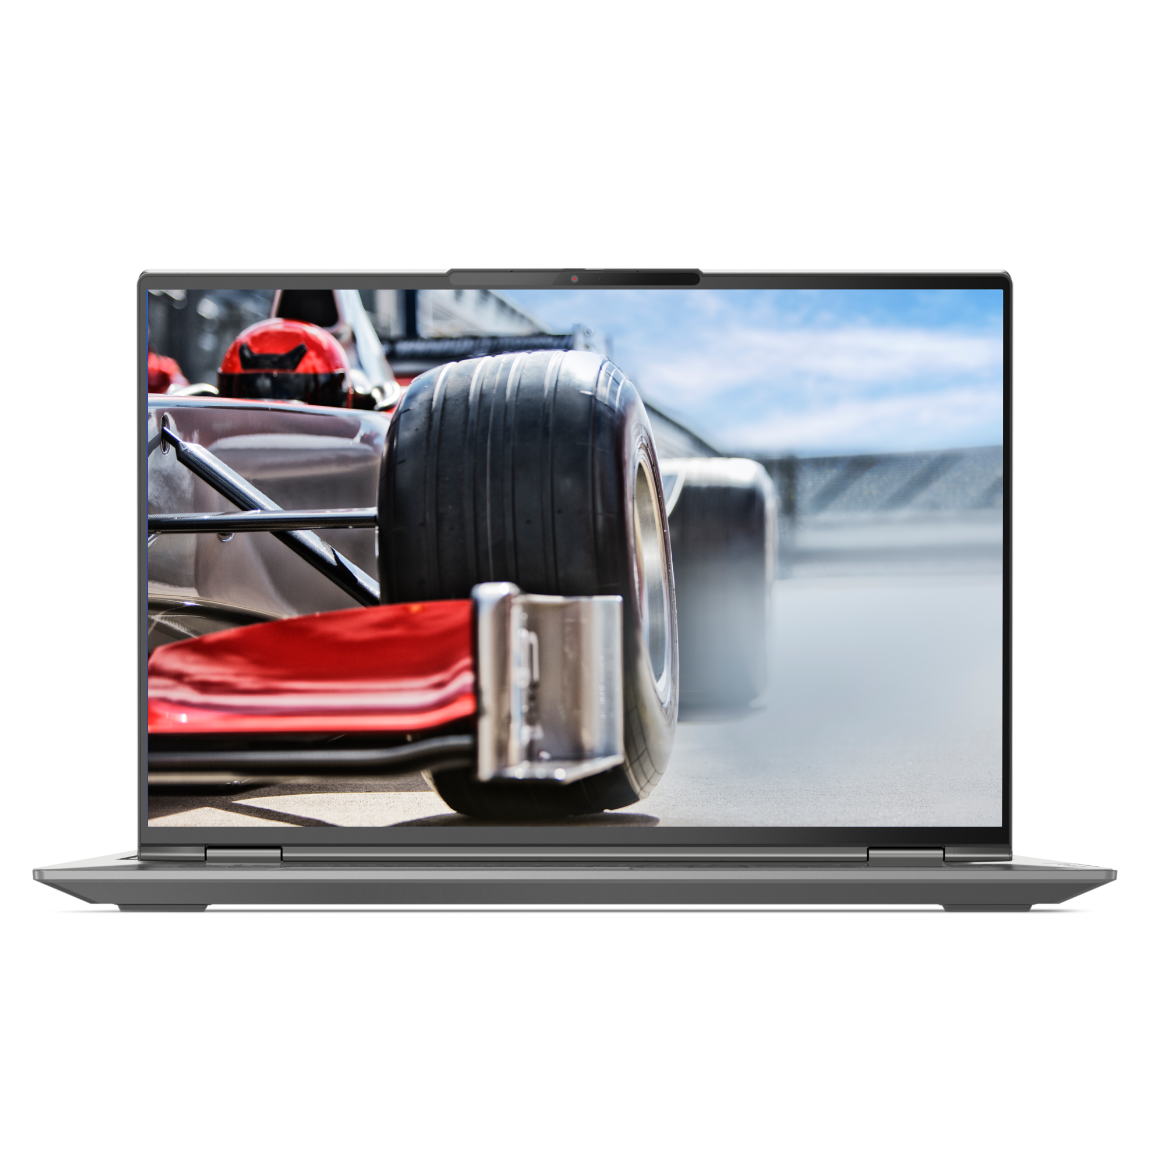 ThinkPad with race car on screen.